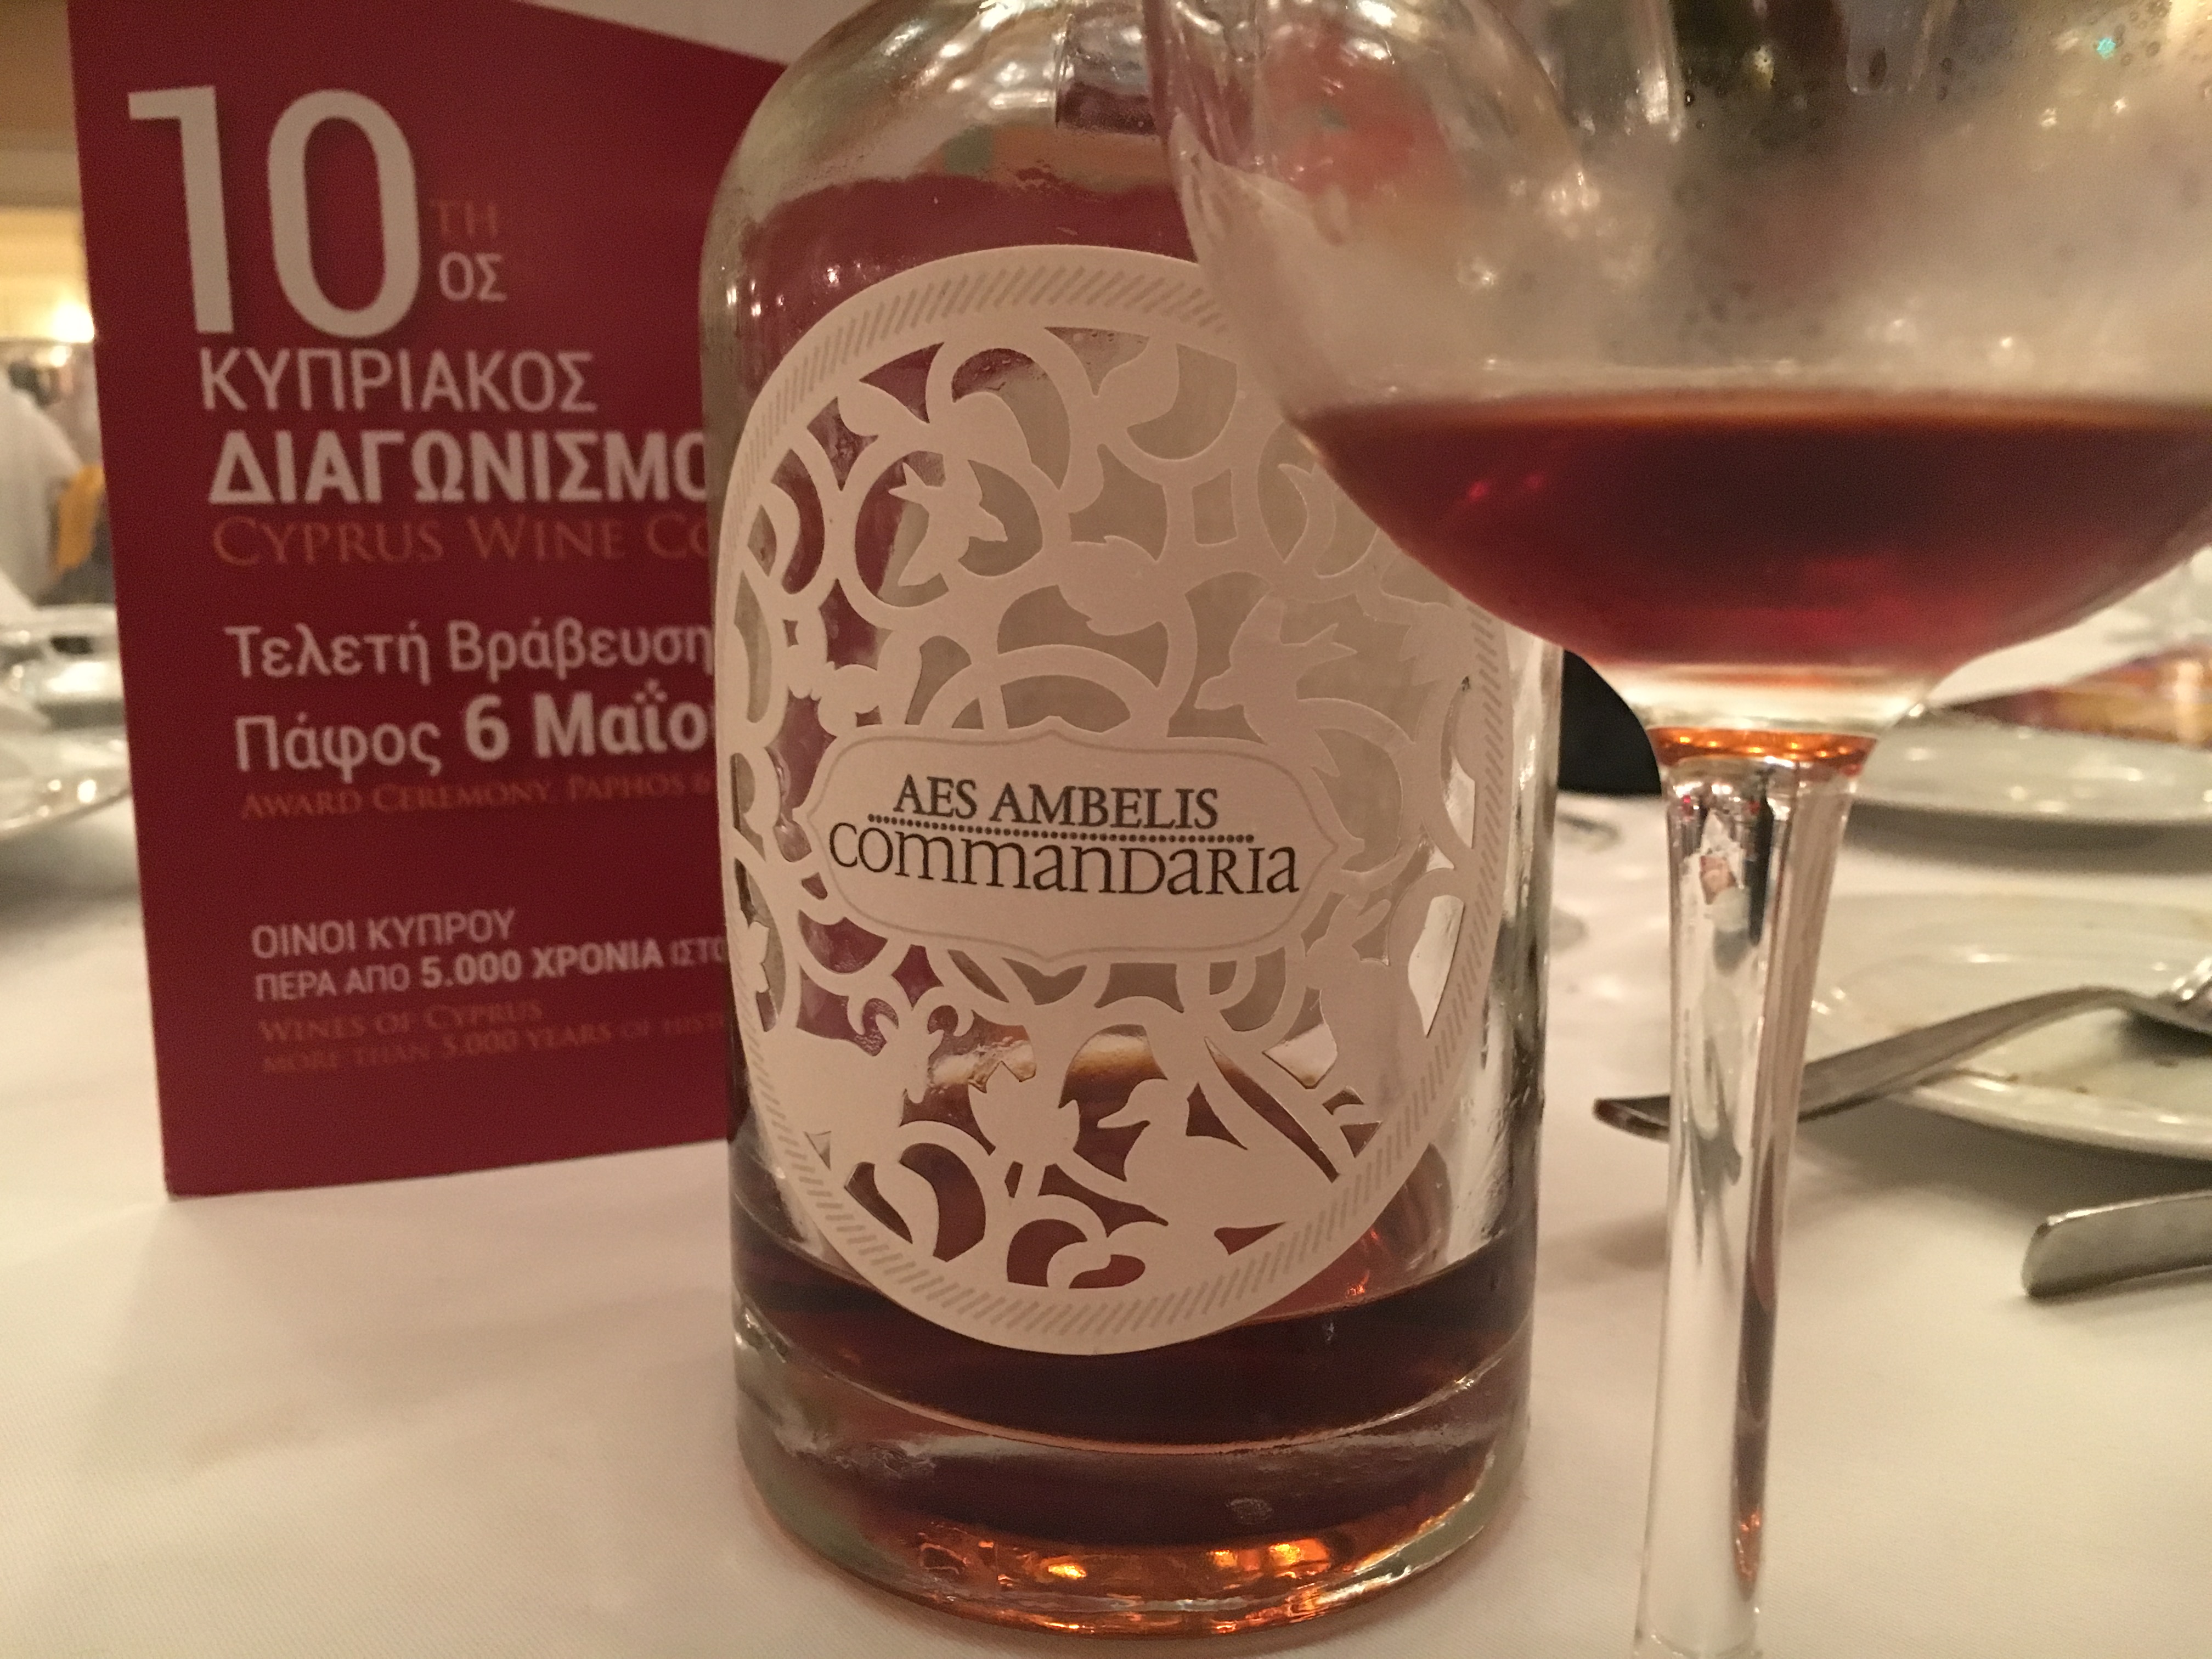 GrandGoldCommandaria - 10th Cyprus wine competition